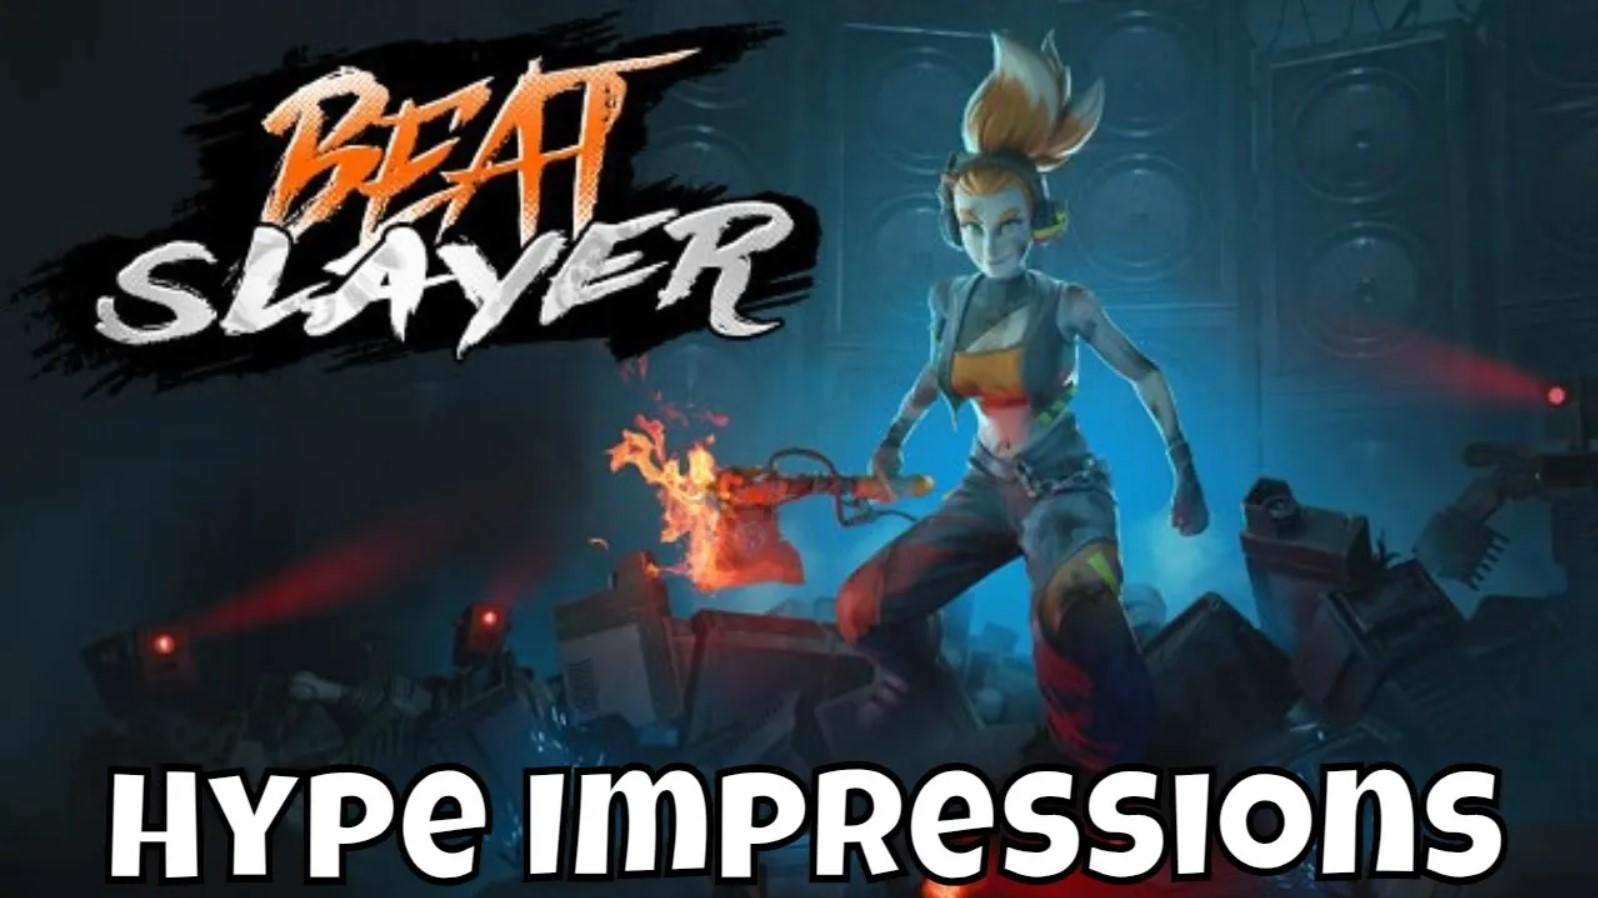 Beat Slayer - Hype Impressions/Steam PC/Kinda Cool